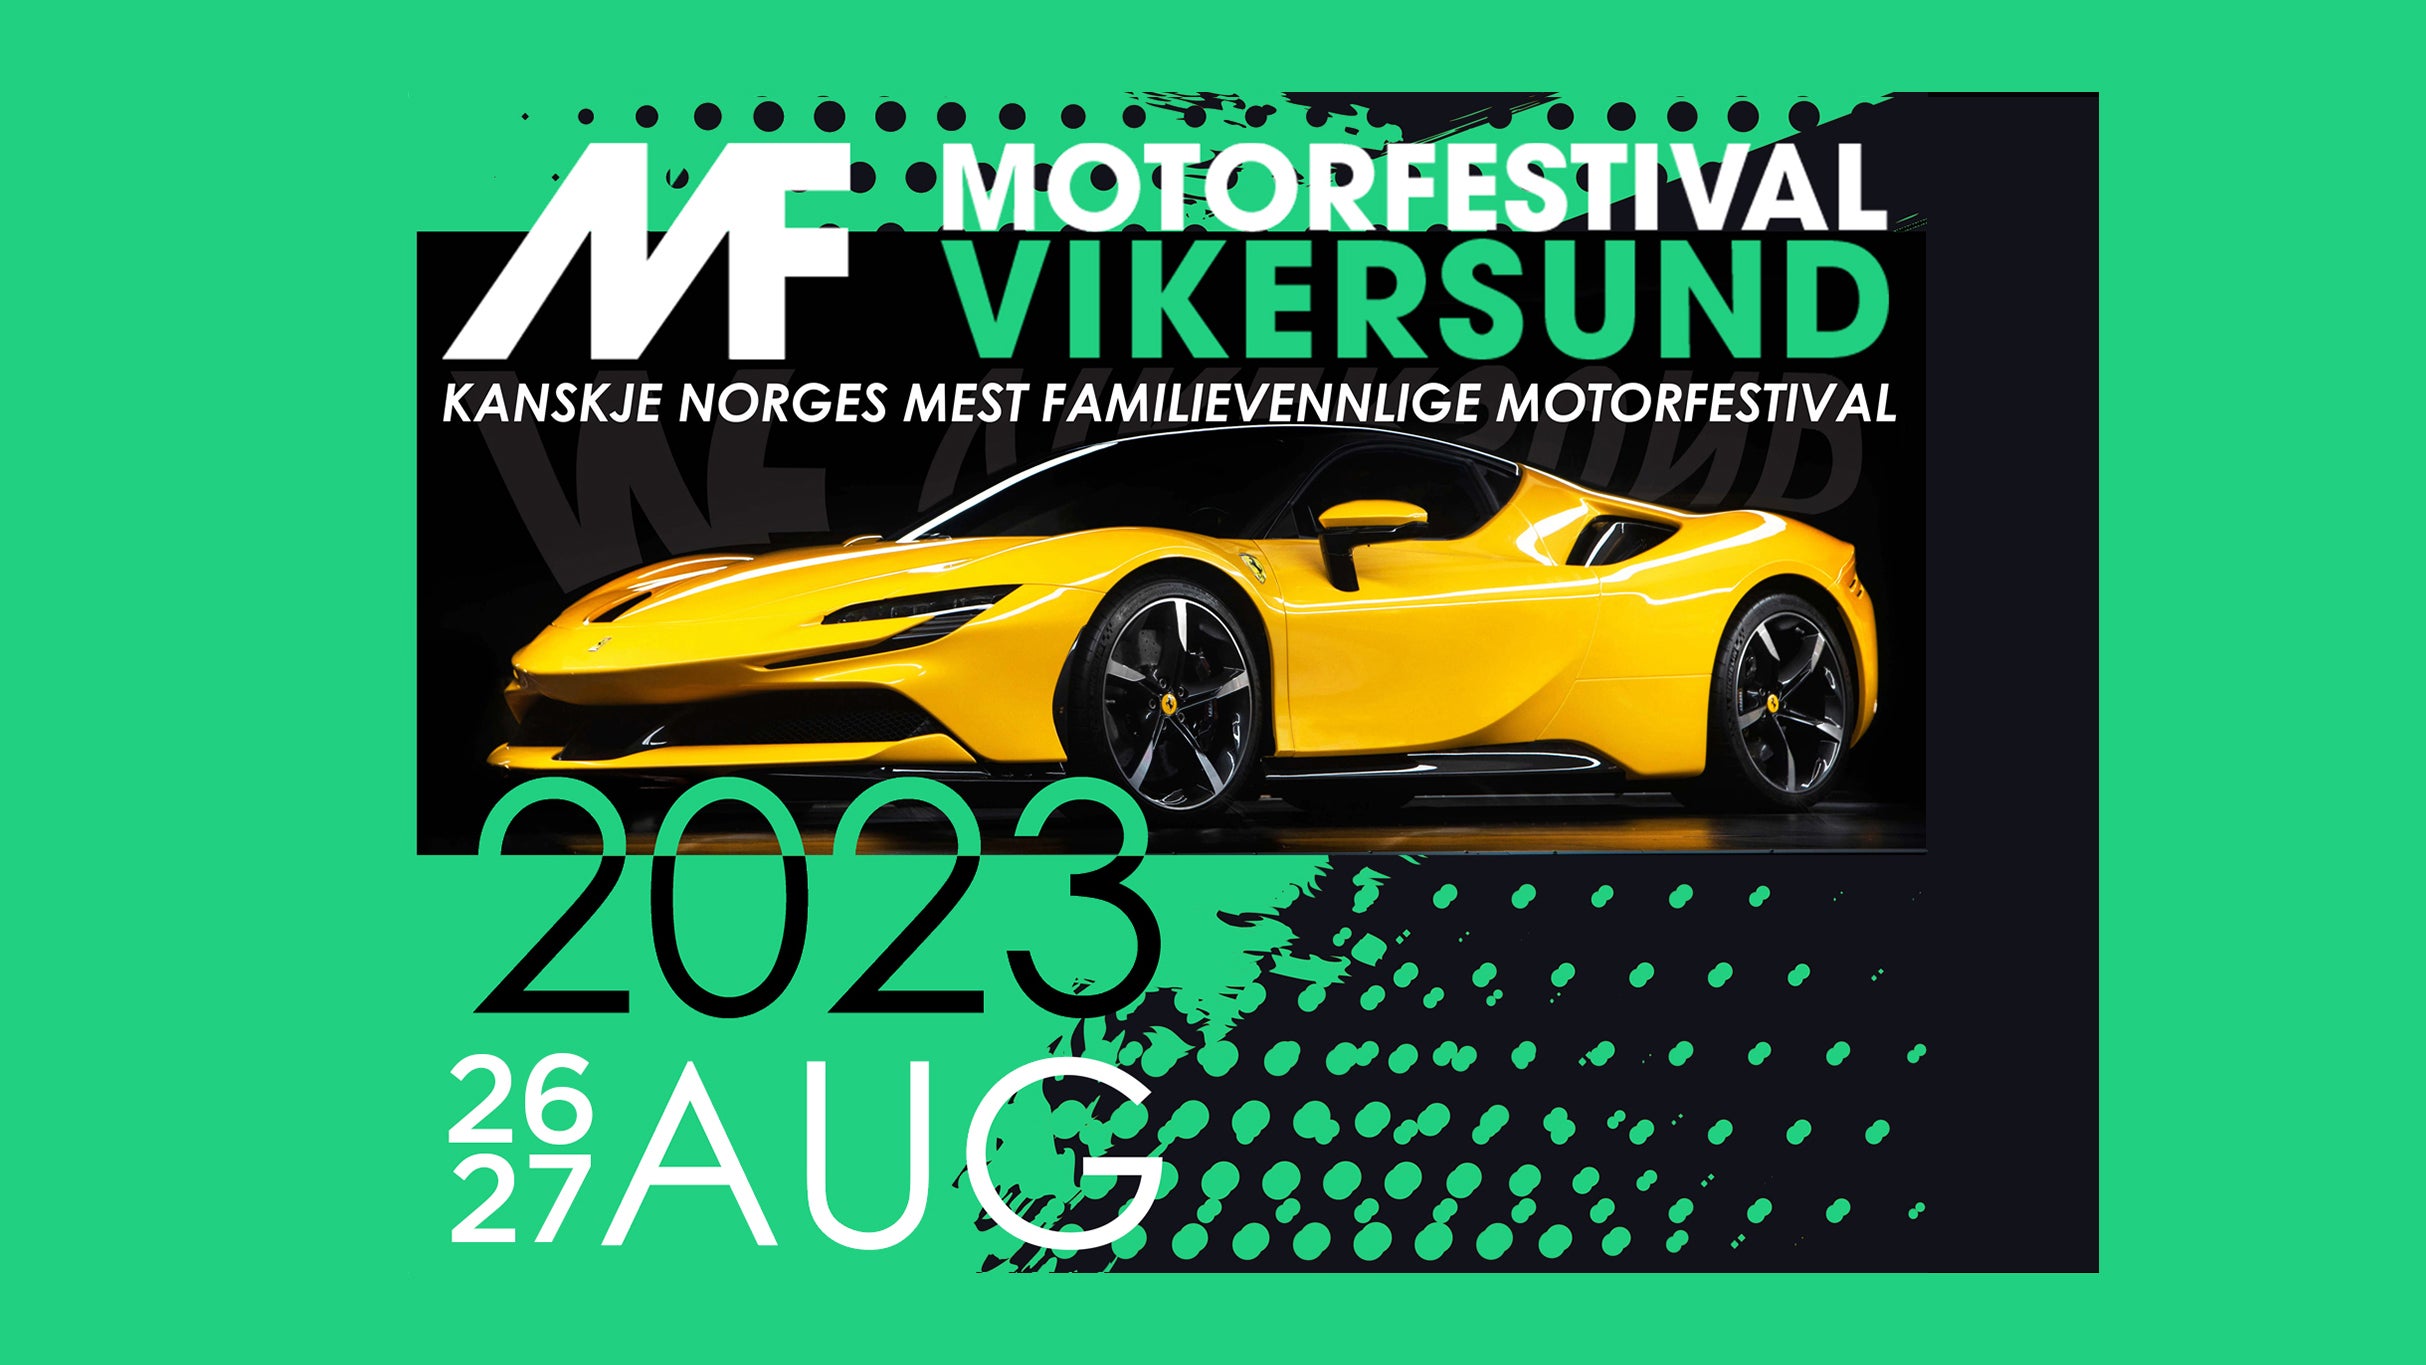 Motorfestival Vikersund presale information on freepresalepasswords.com